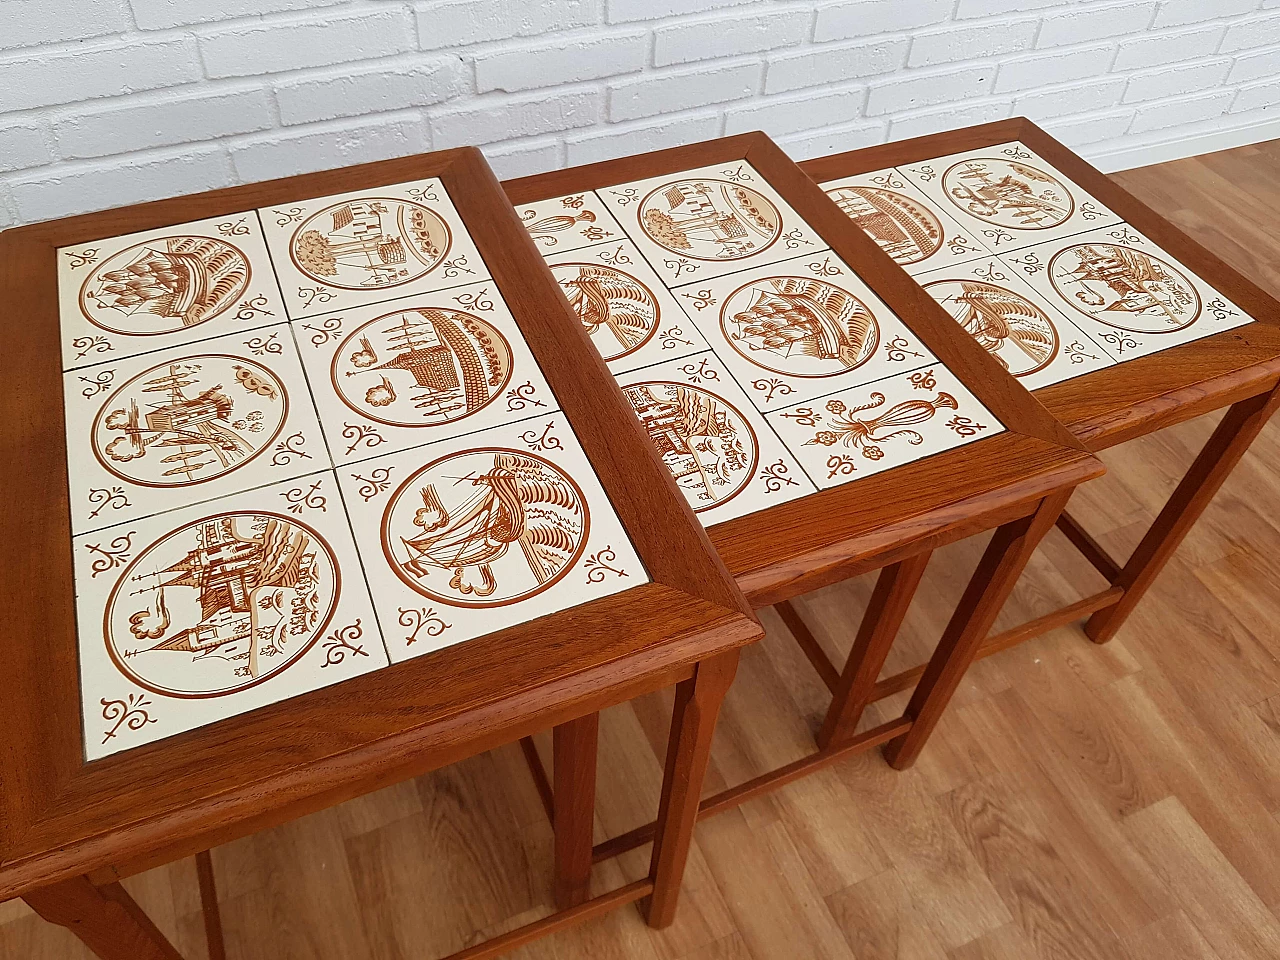 Nesting table, 60s, danish design, hand-painted ceramic tiles, teak wood 1064959